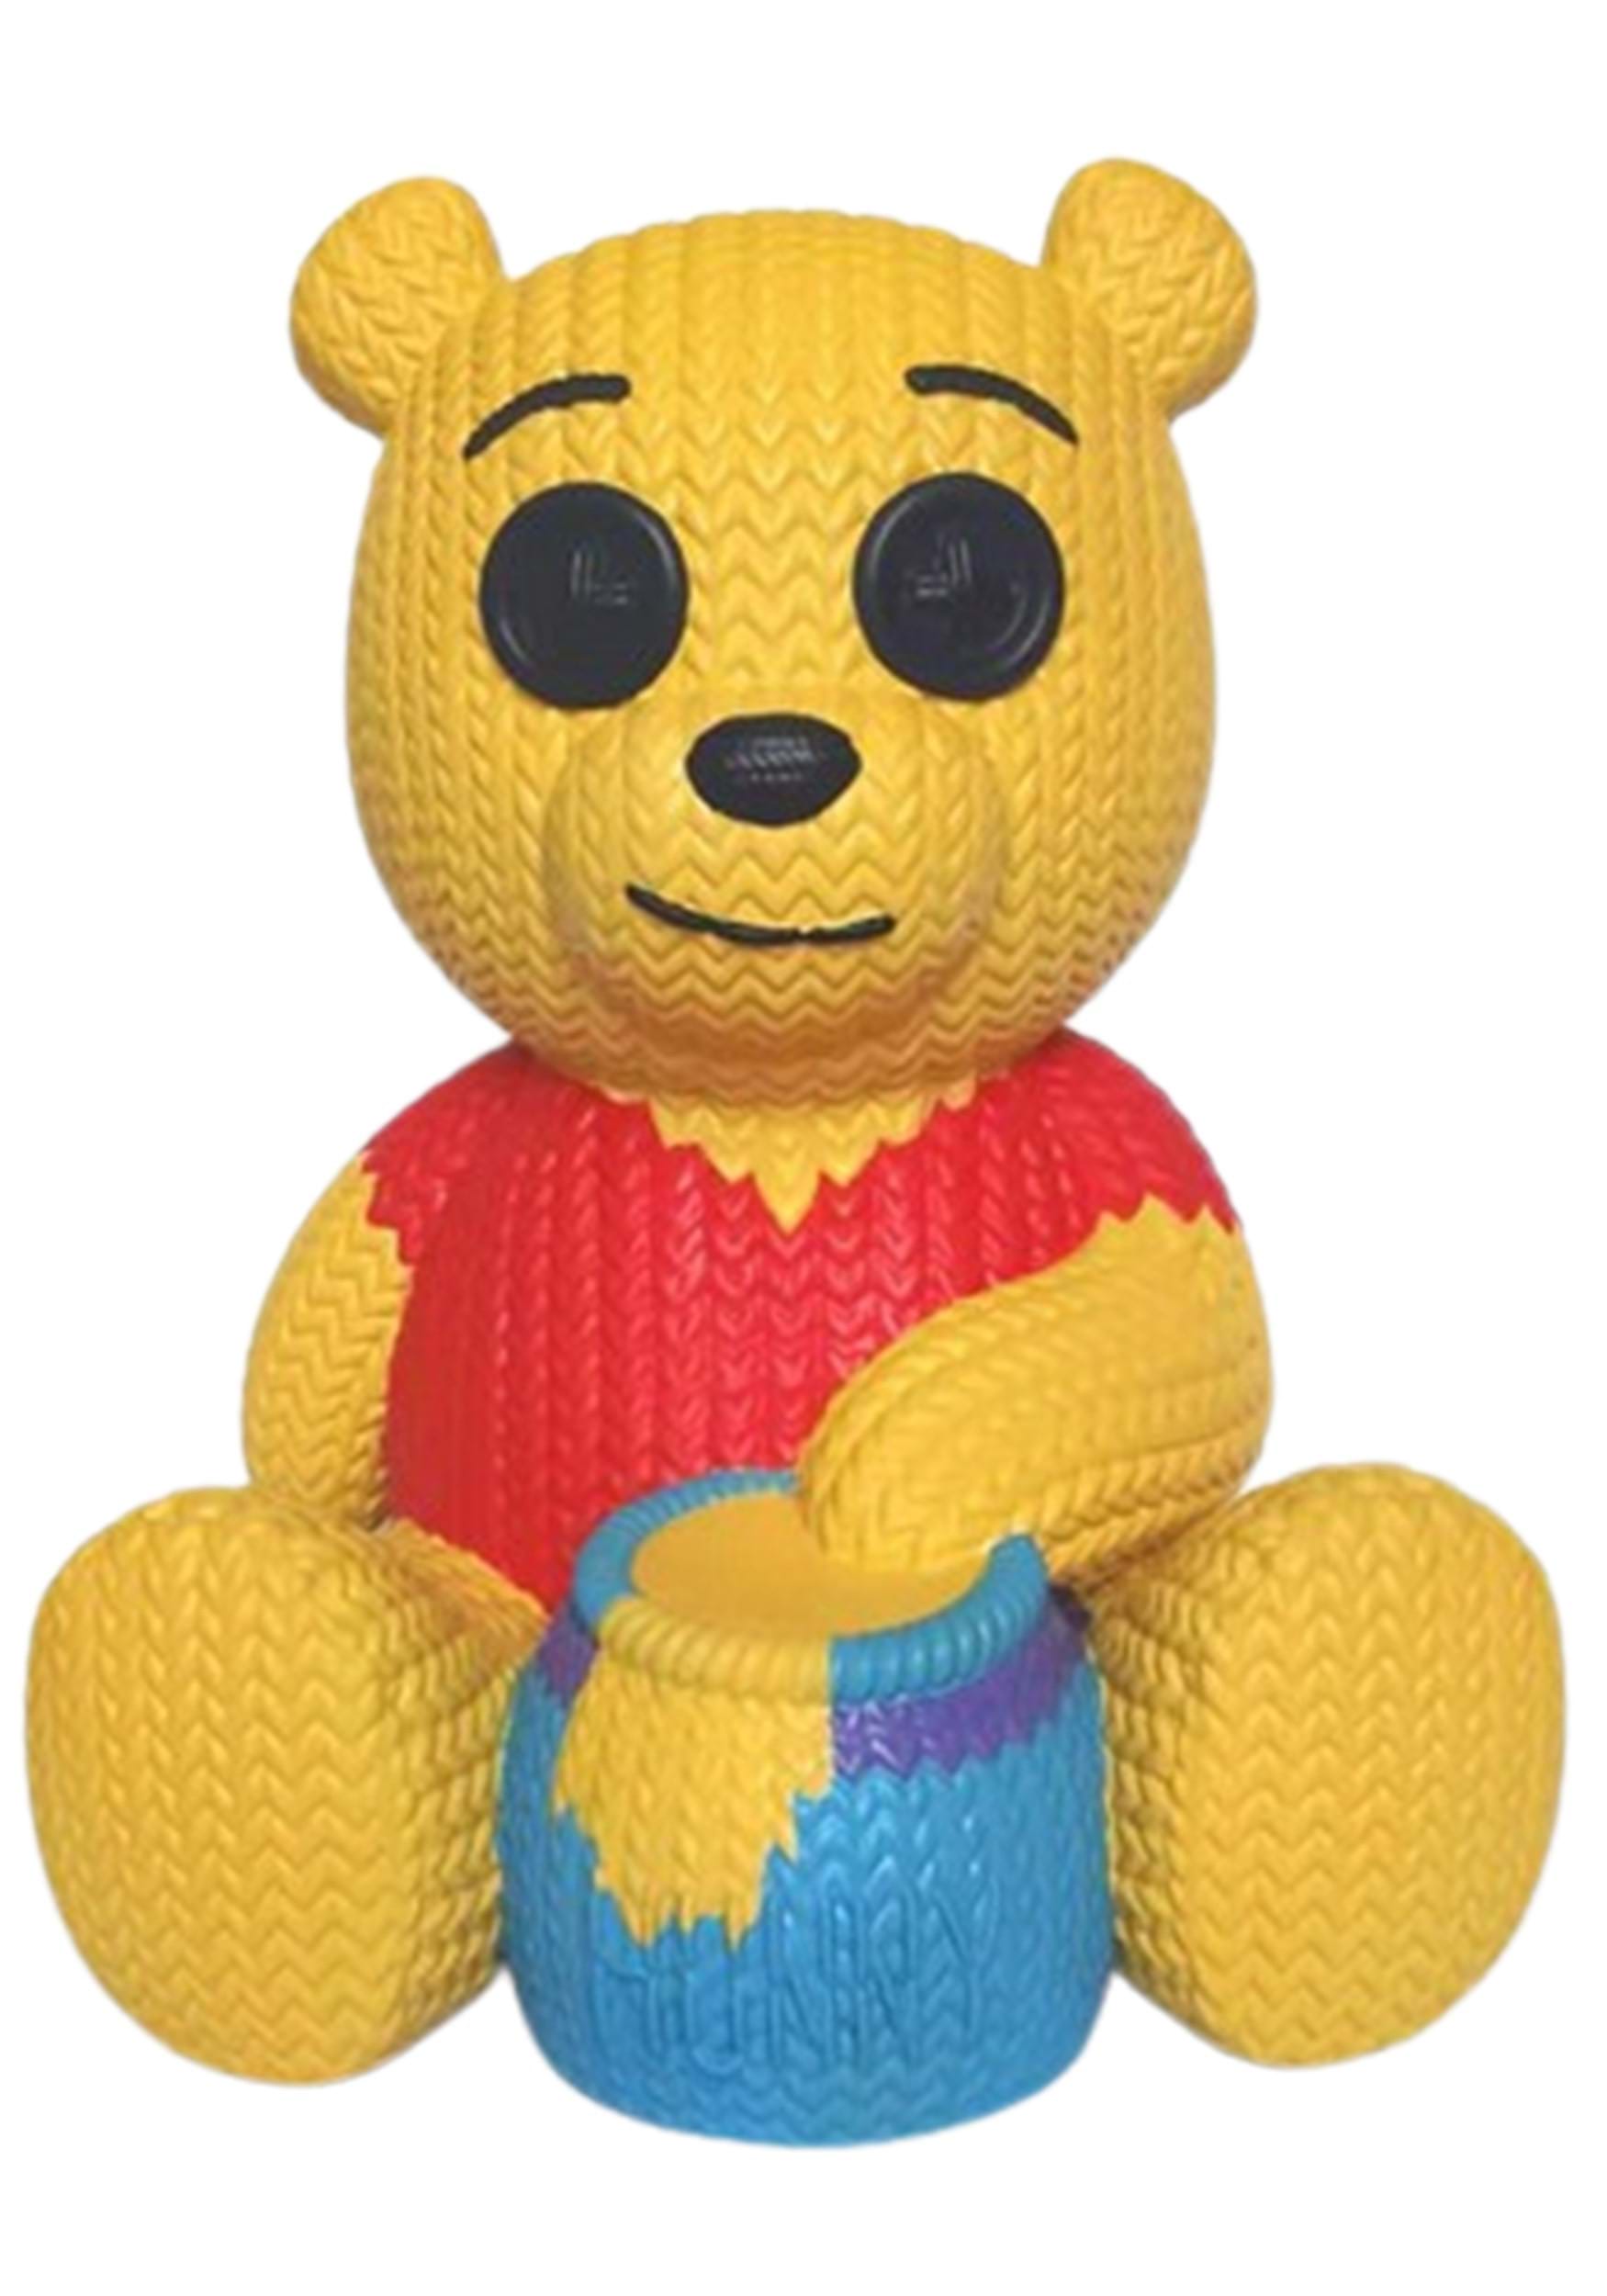 Disneys Winnie the Pooh Handmade by Robots Vinyl Figure